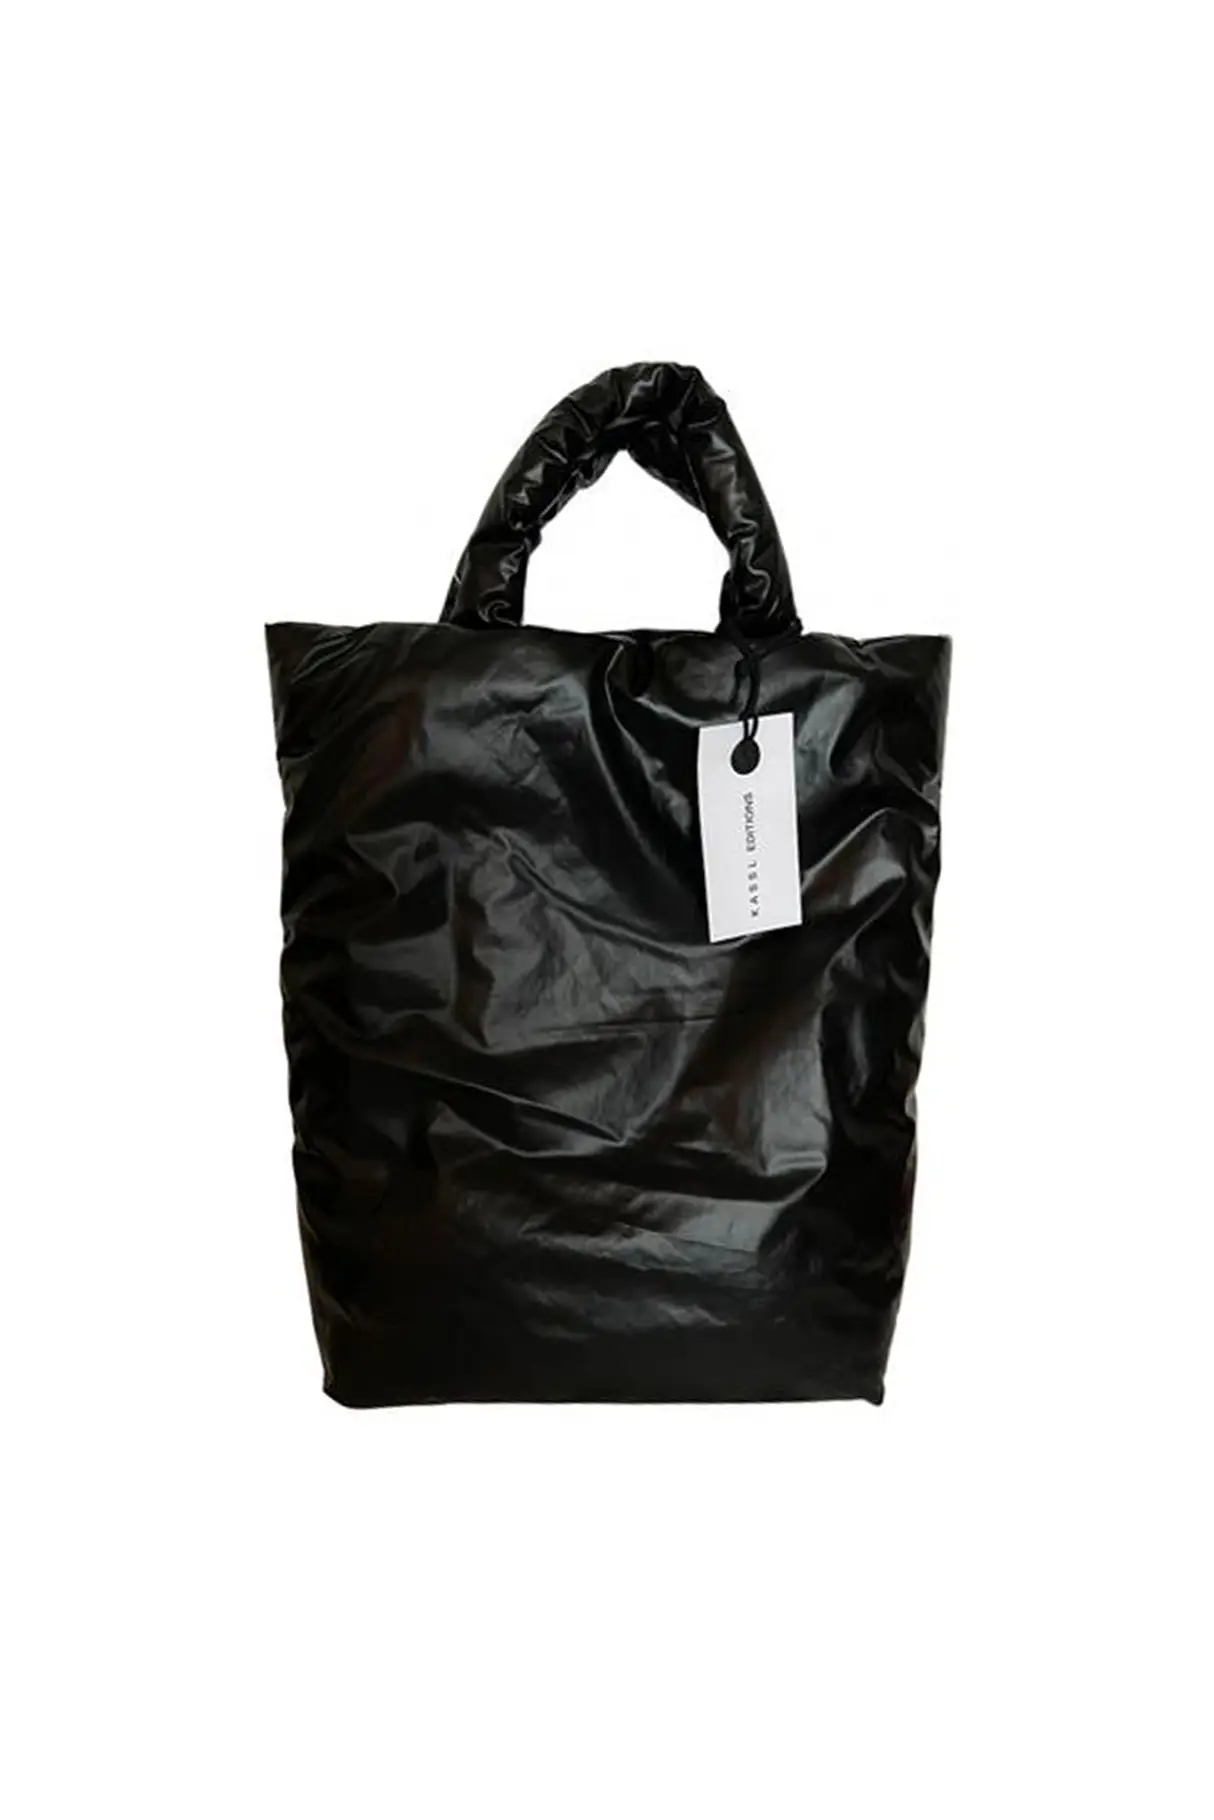 kassl-editions-black-synthetic-tote-bag.jpg